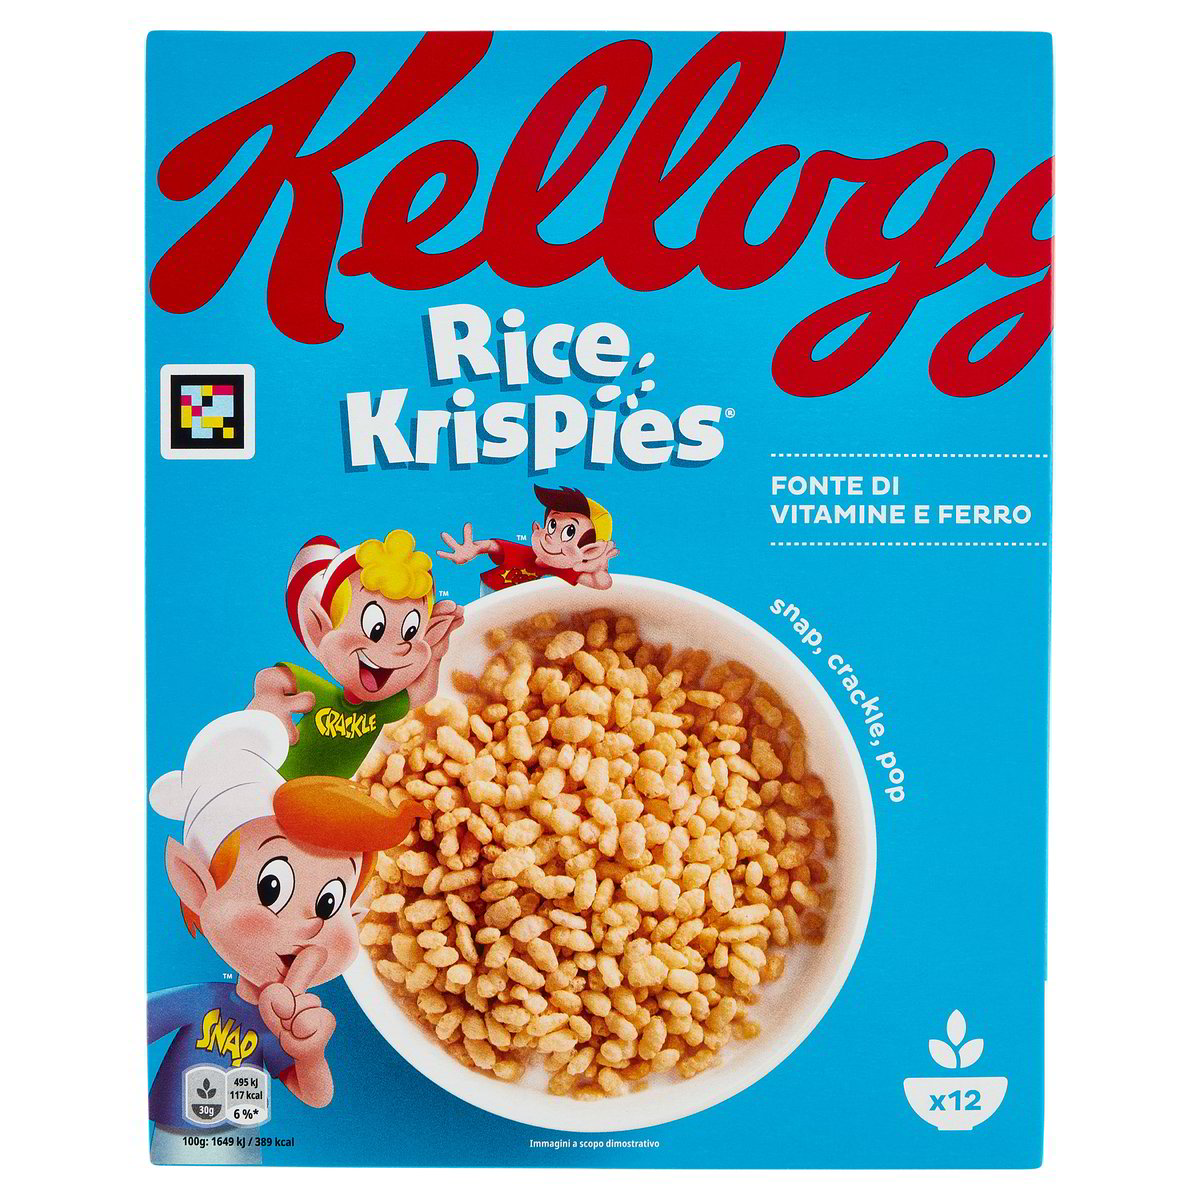  Kellogg's Rice Krispies